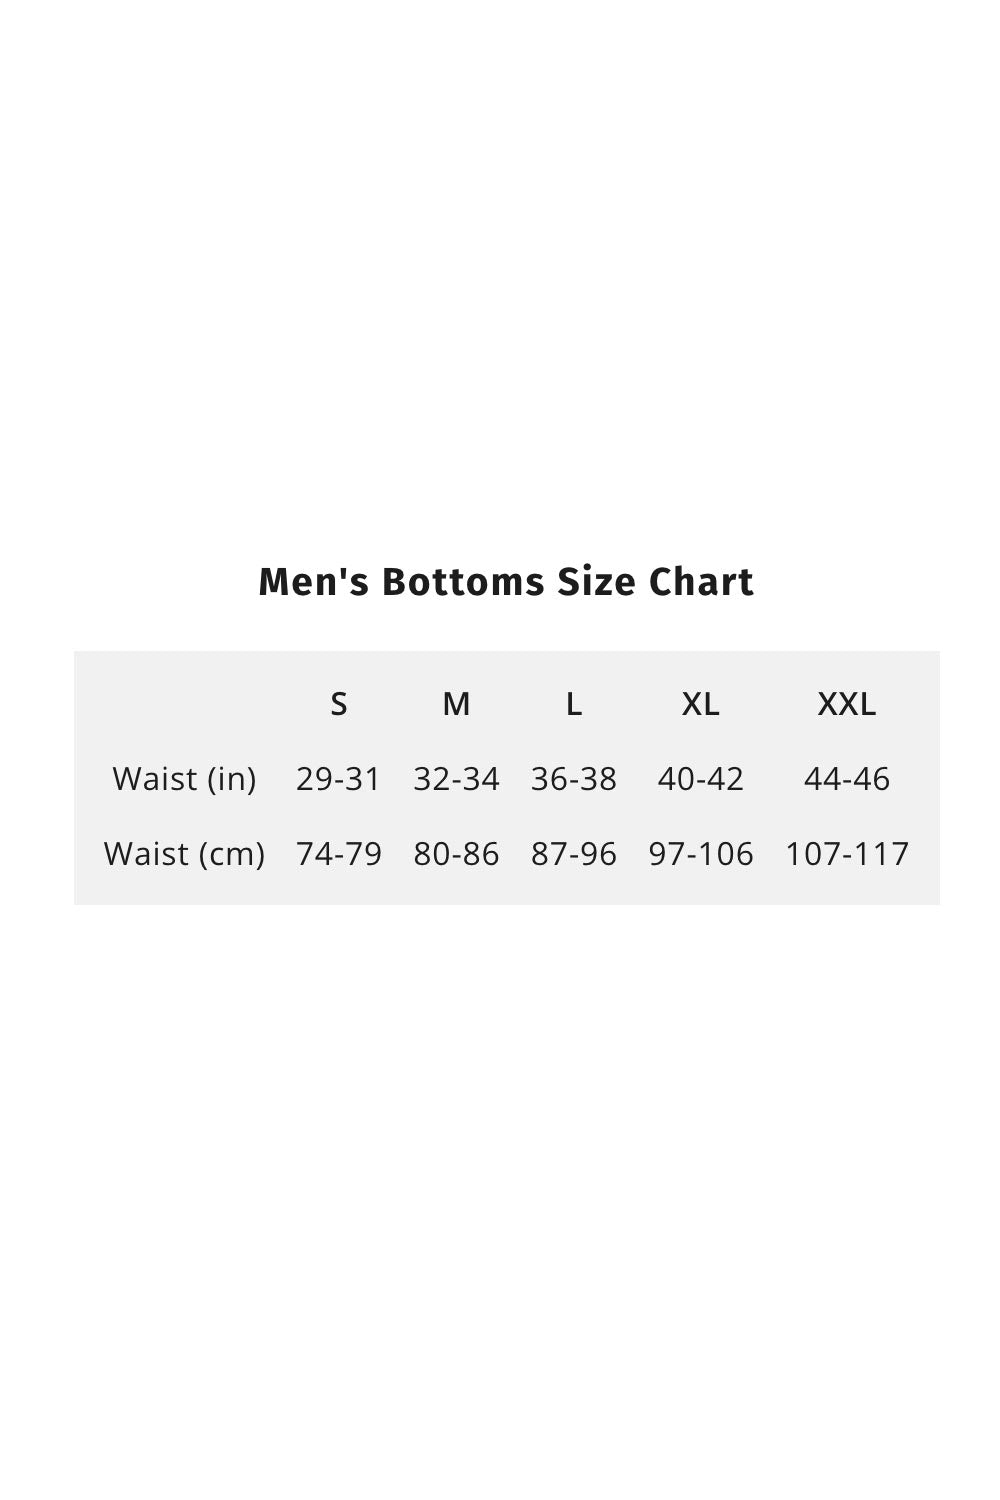 Hot Chillys Men's Bottoms Size Chart